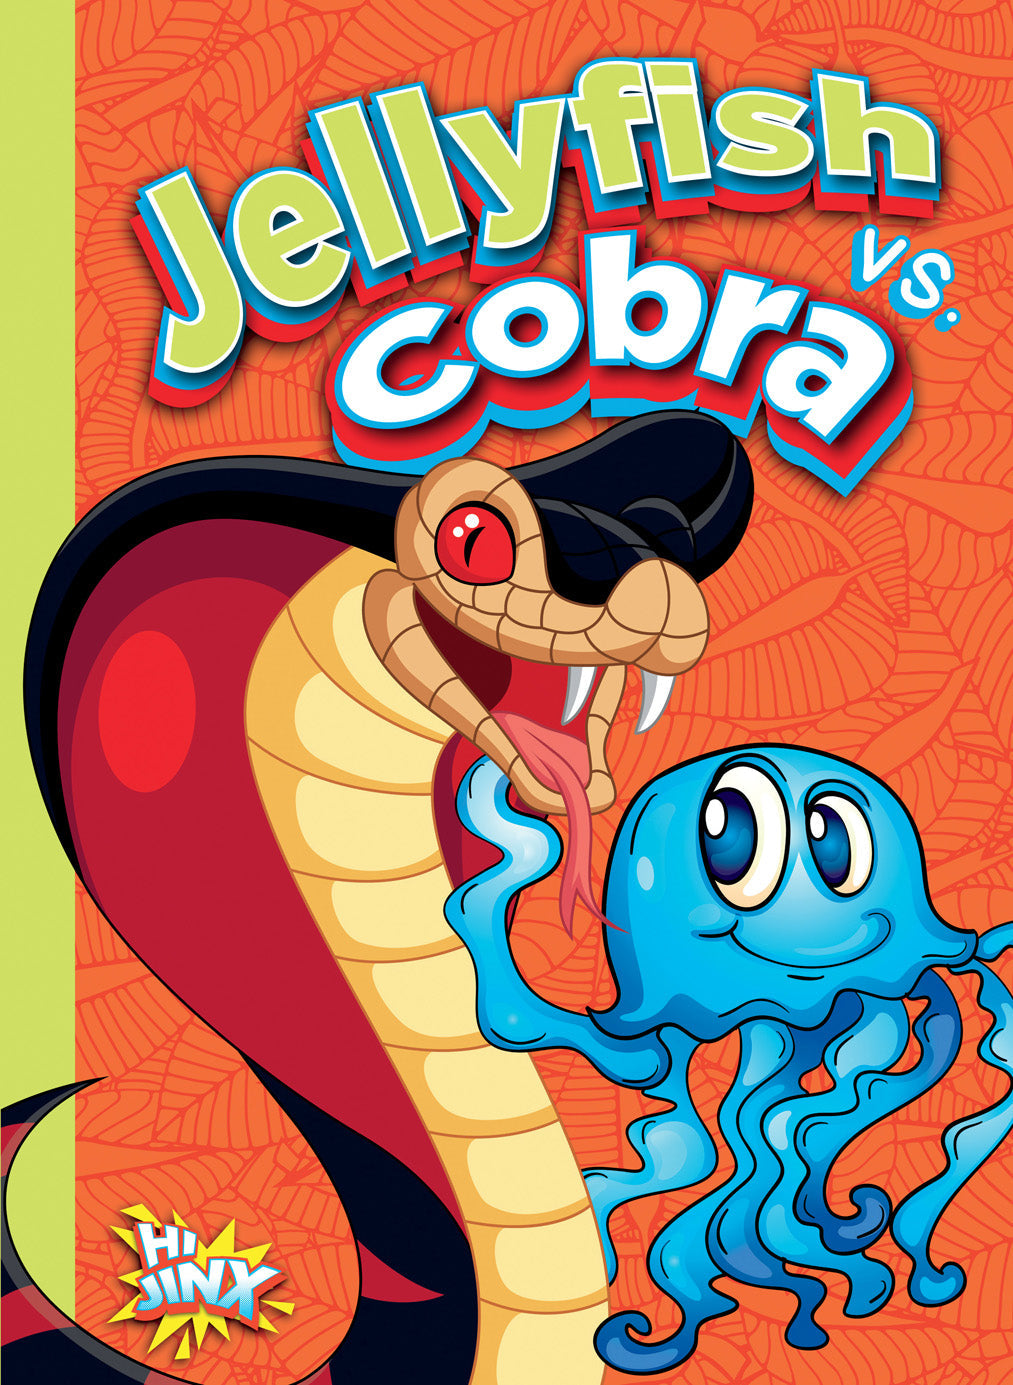 Versus!: Jellyfish vs. Cobra